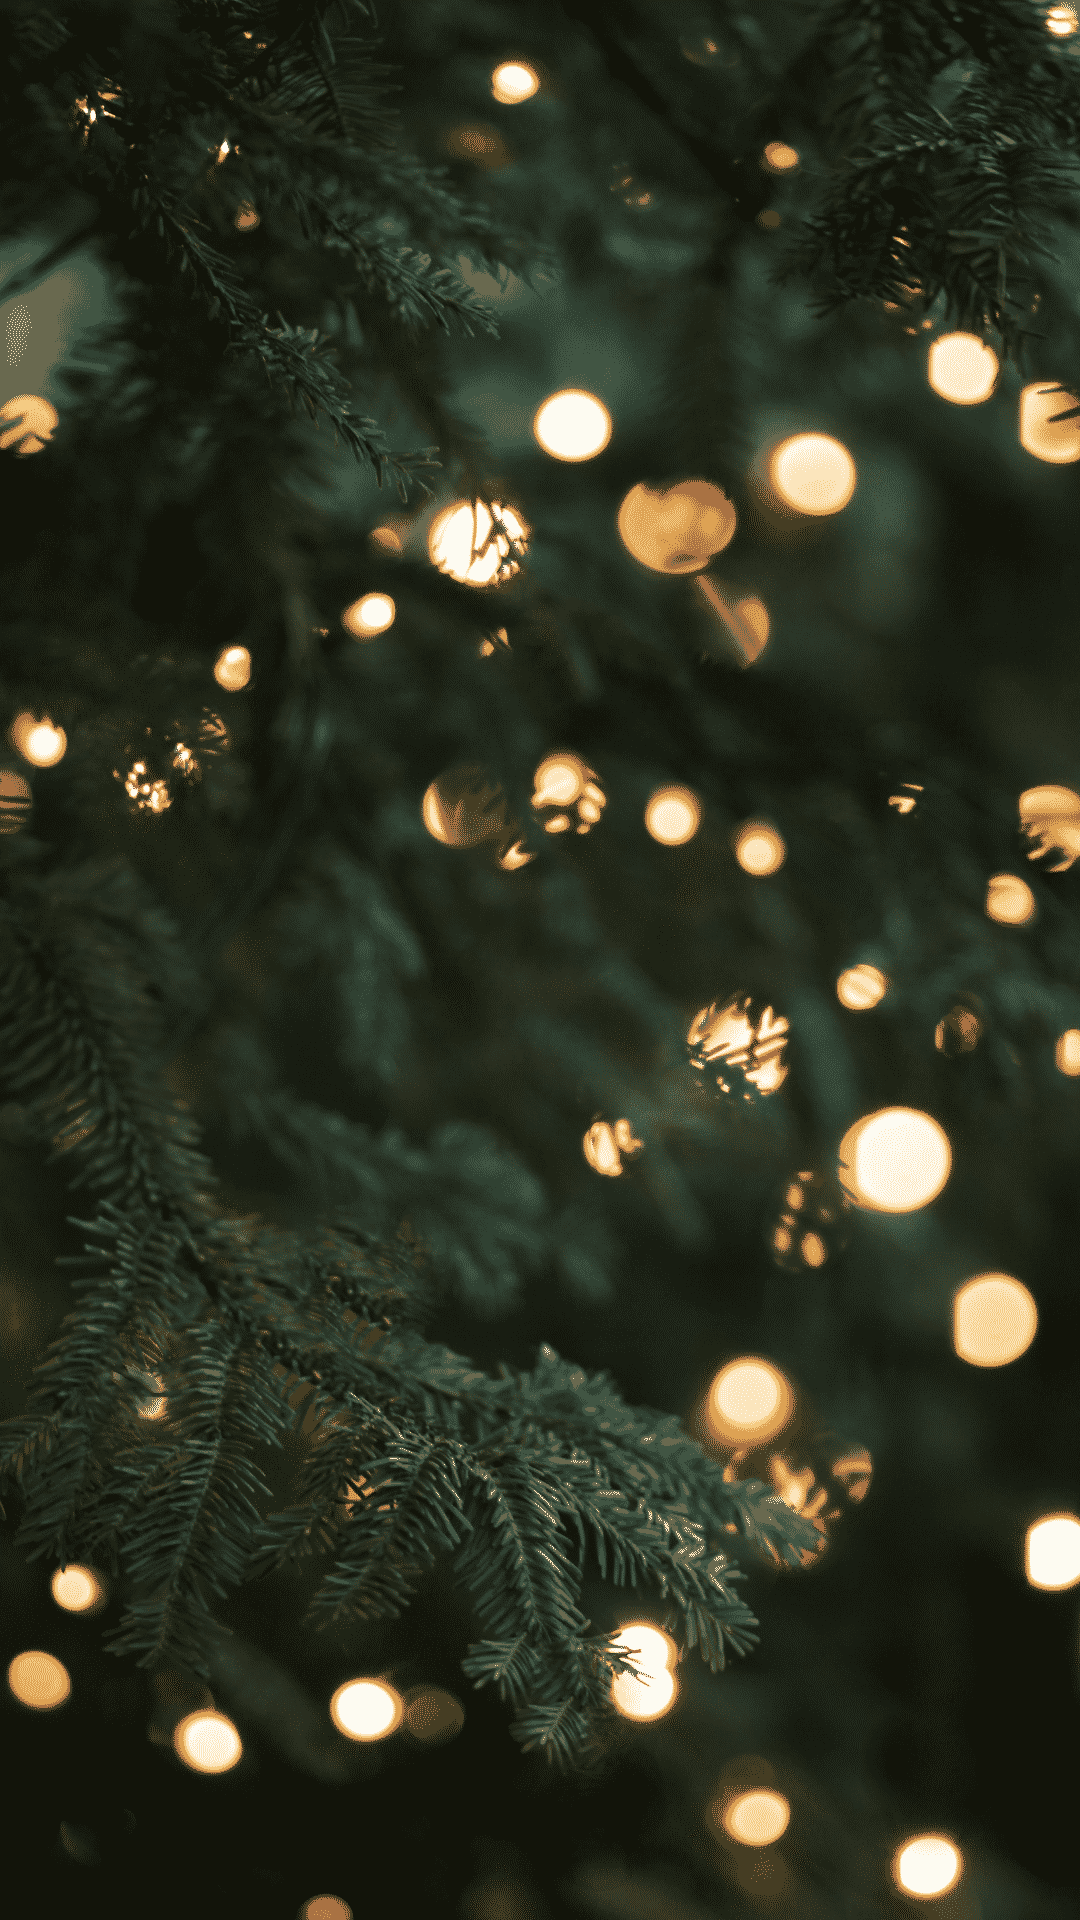  Weihnachts Hintergrundbild 1080x1920. FREE Aesthetic Christmas Wallpaper For A Festive Phone